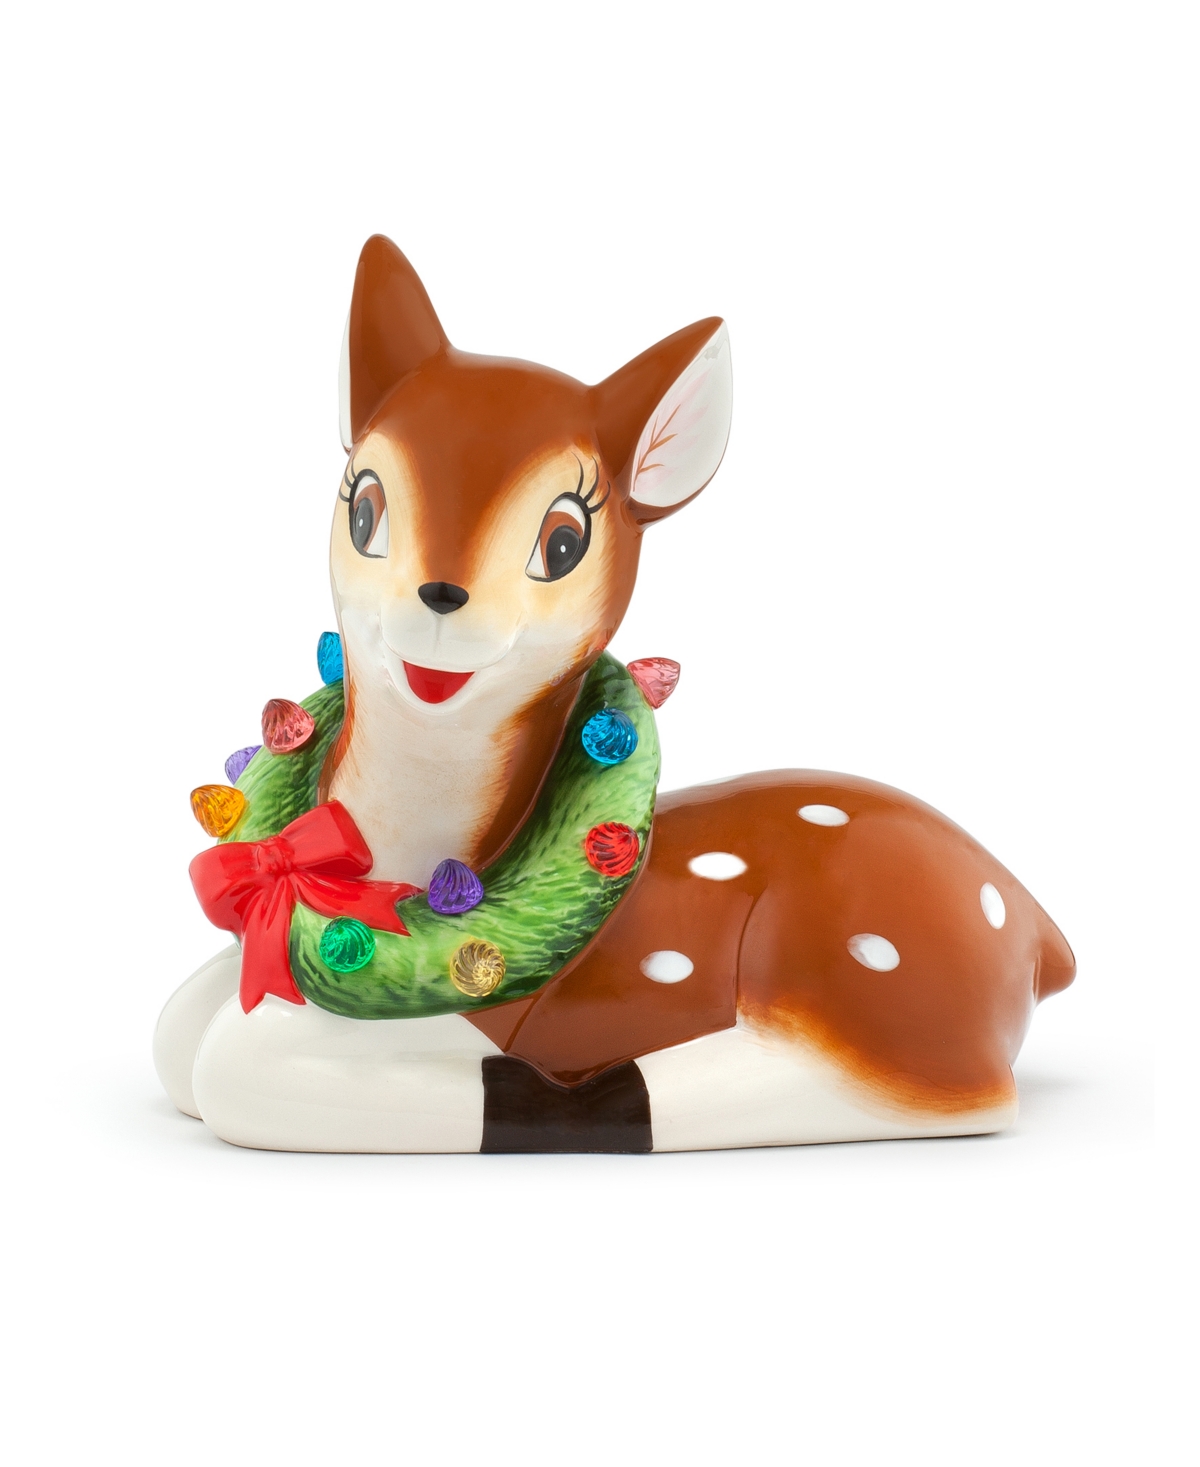 Mr. Christmas 9" Nostalgic Ceramic Lit Reindeer In Brown